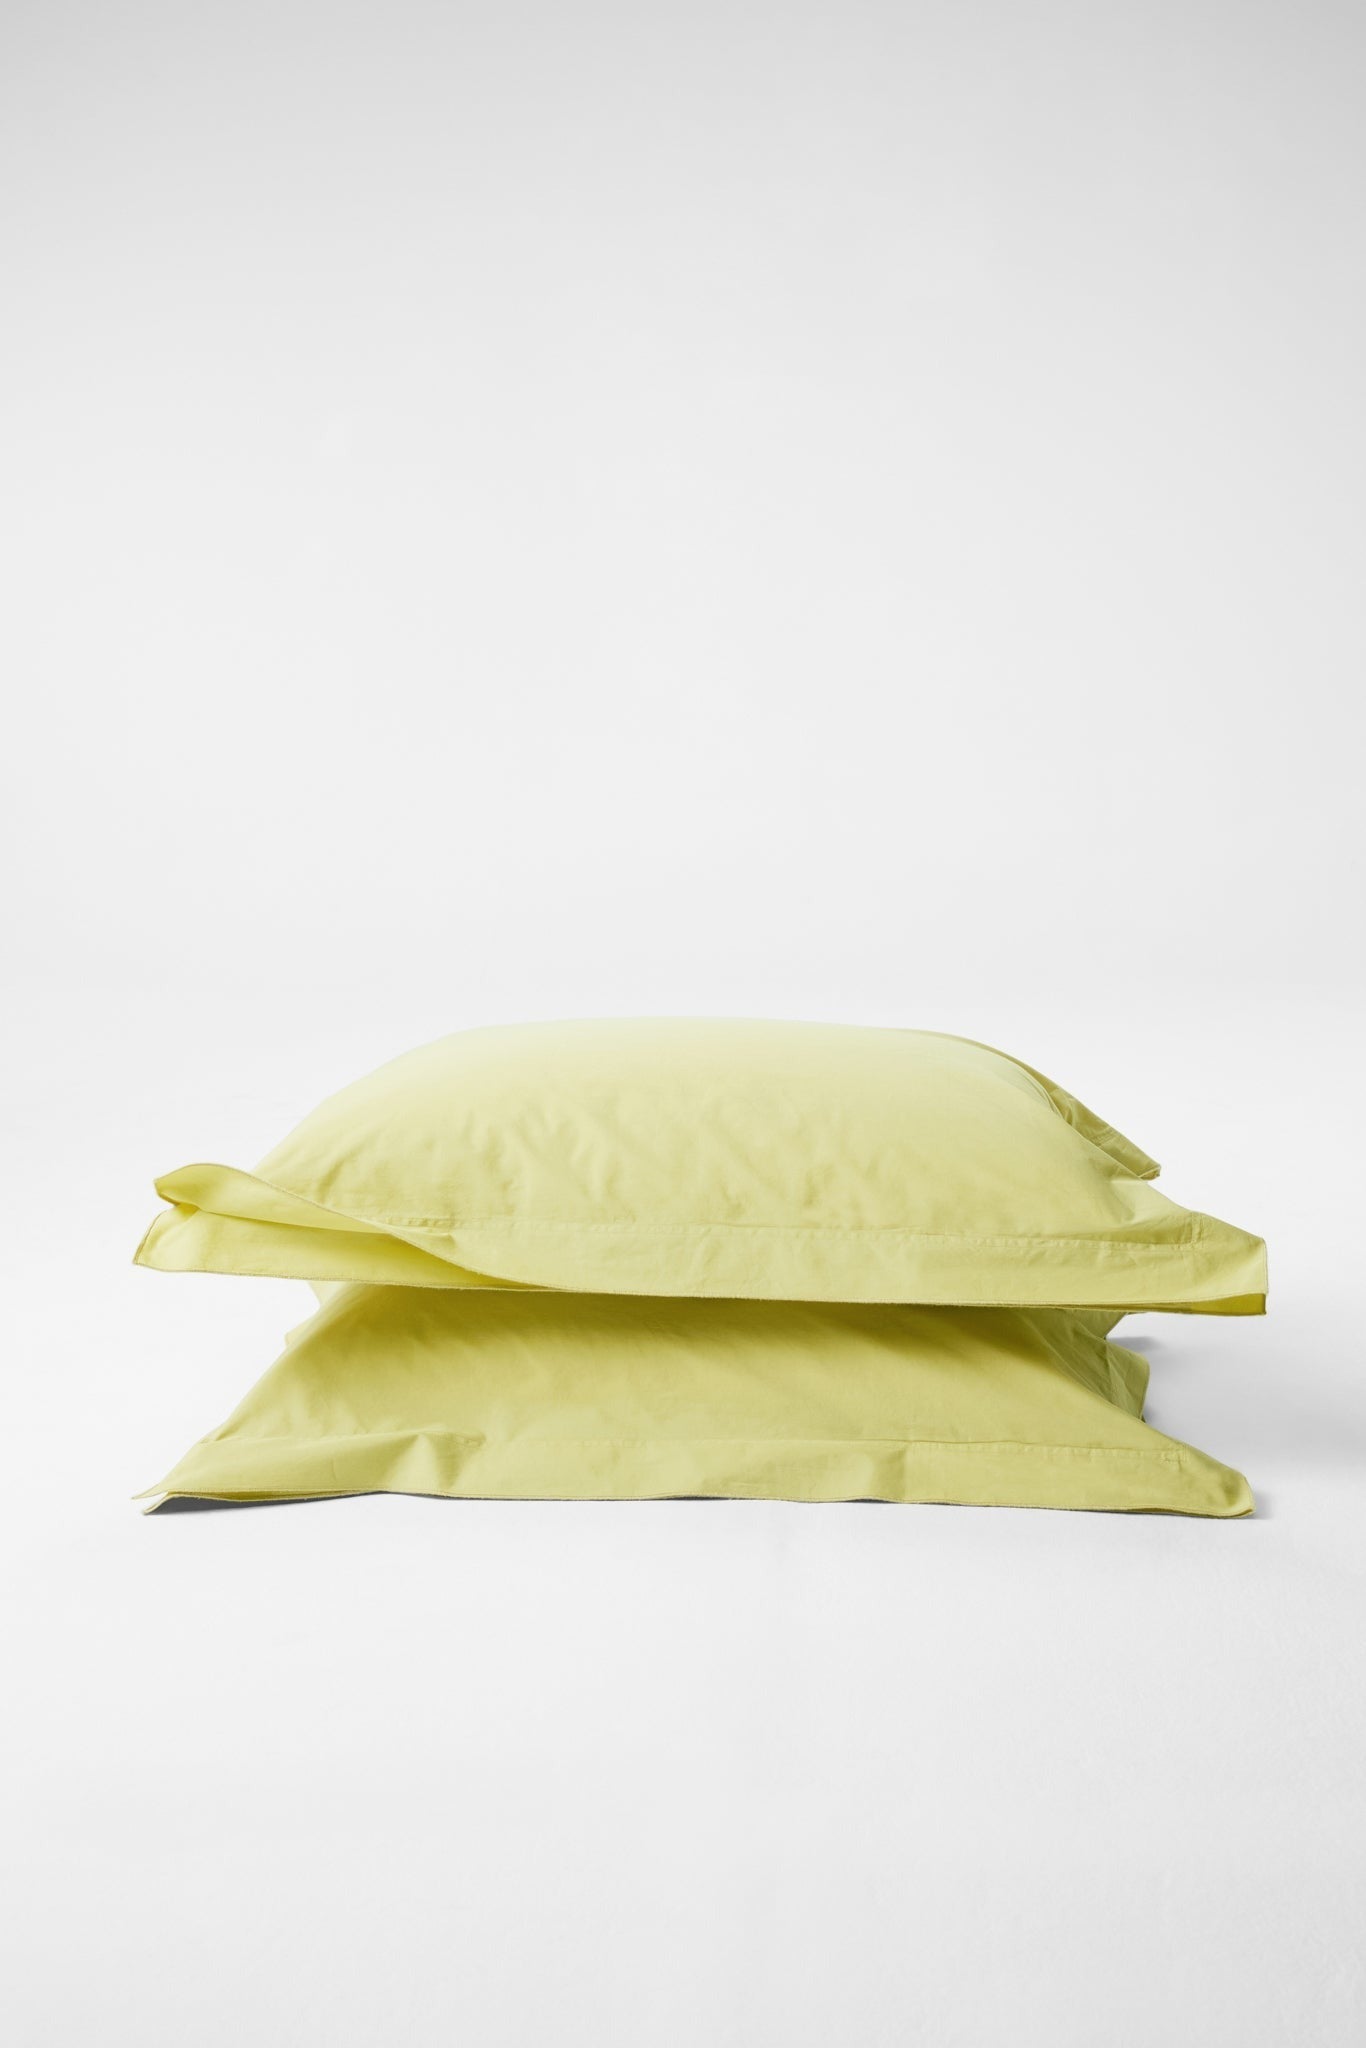 Mono Organic Cotton Percale Pillow Pair - Sulphur Pillows in King Pillow